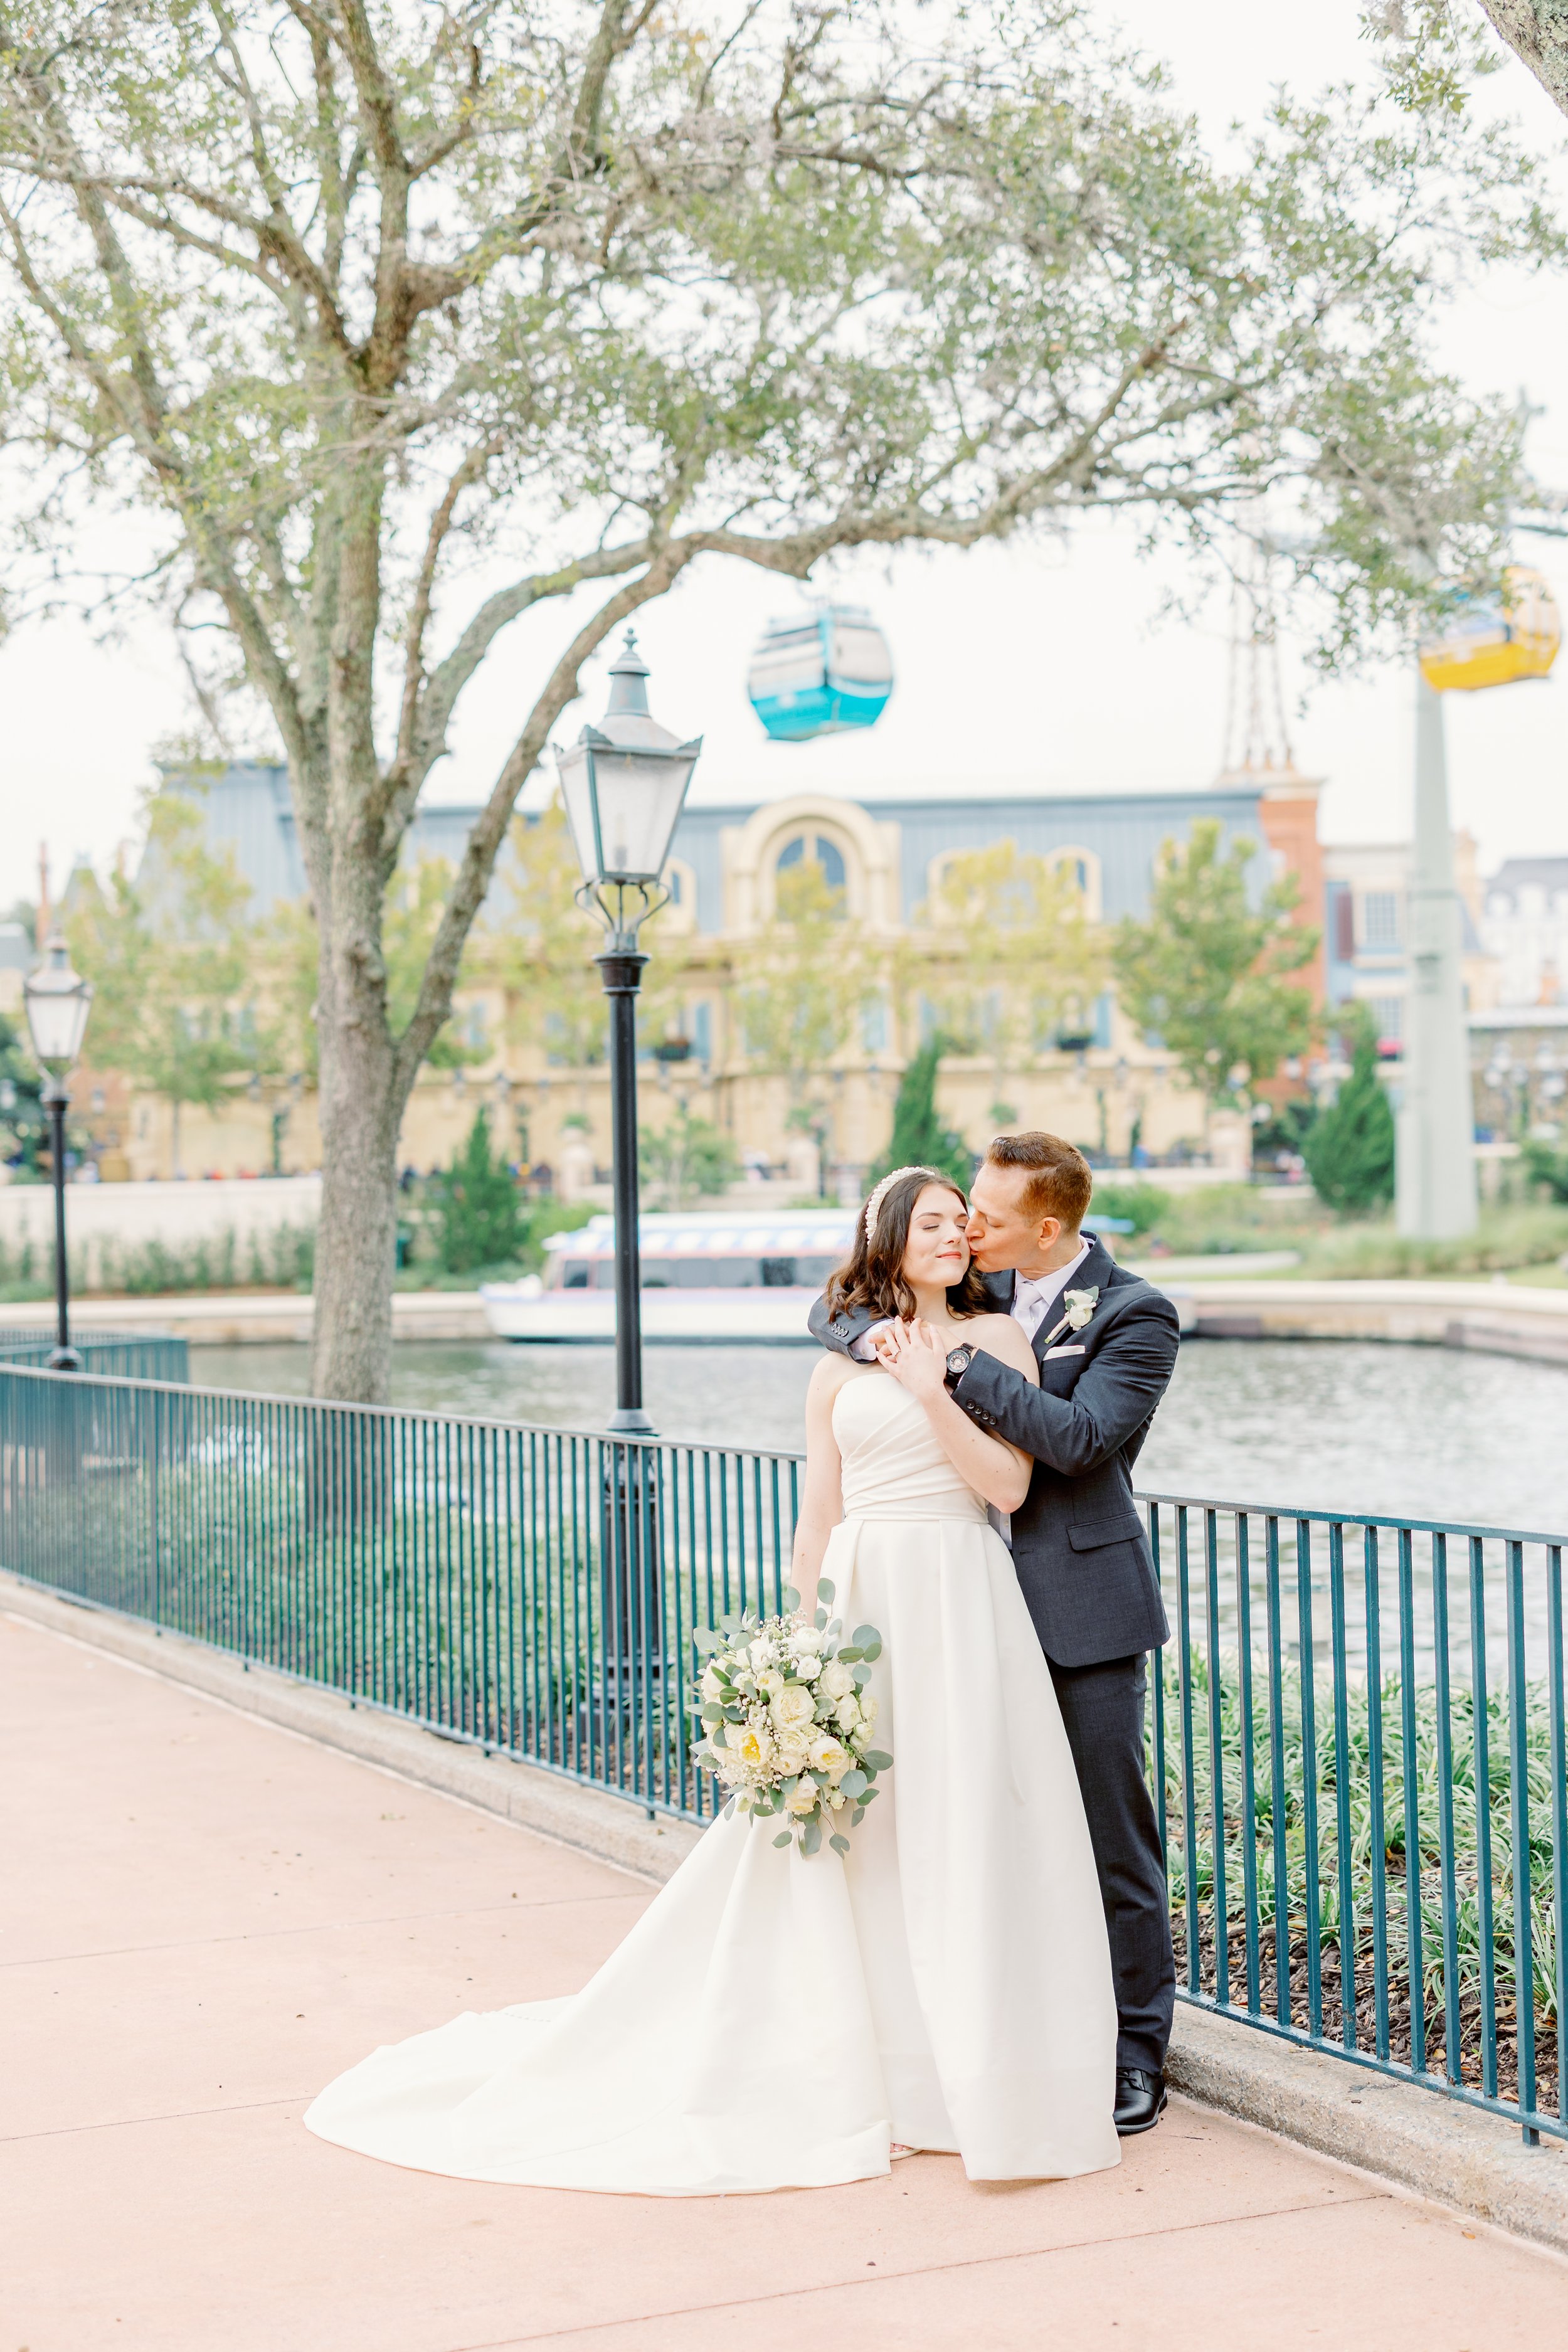 Disney wedding photographer